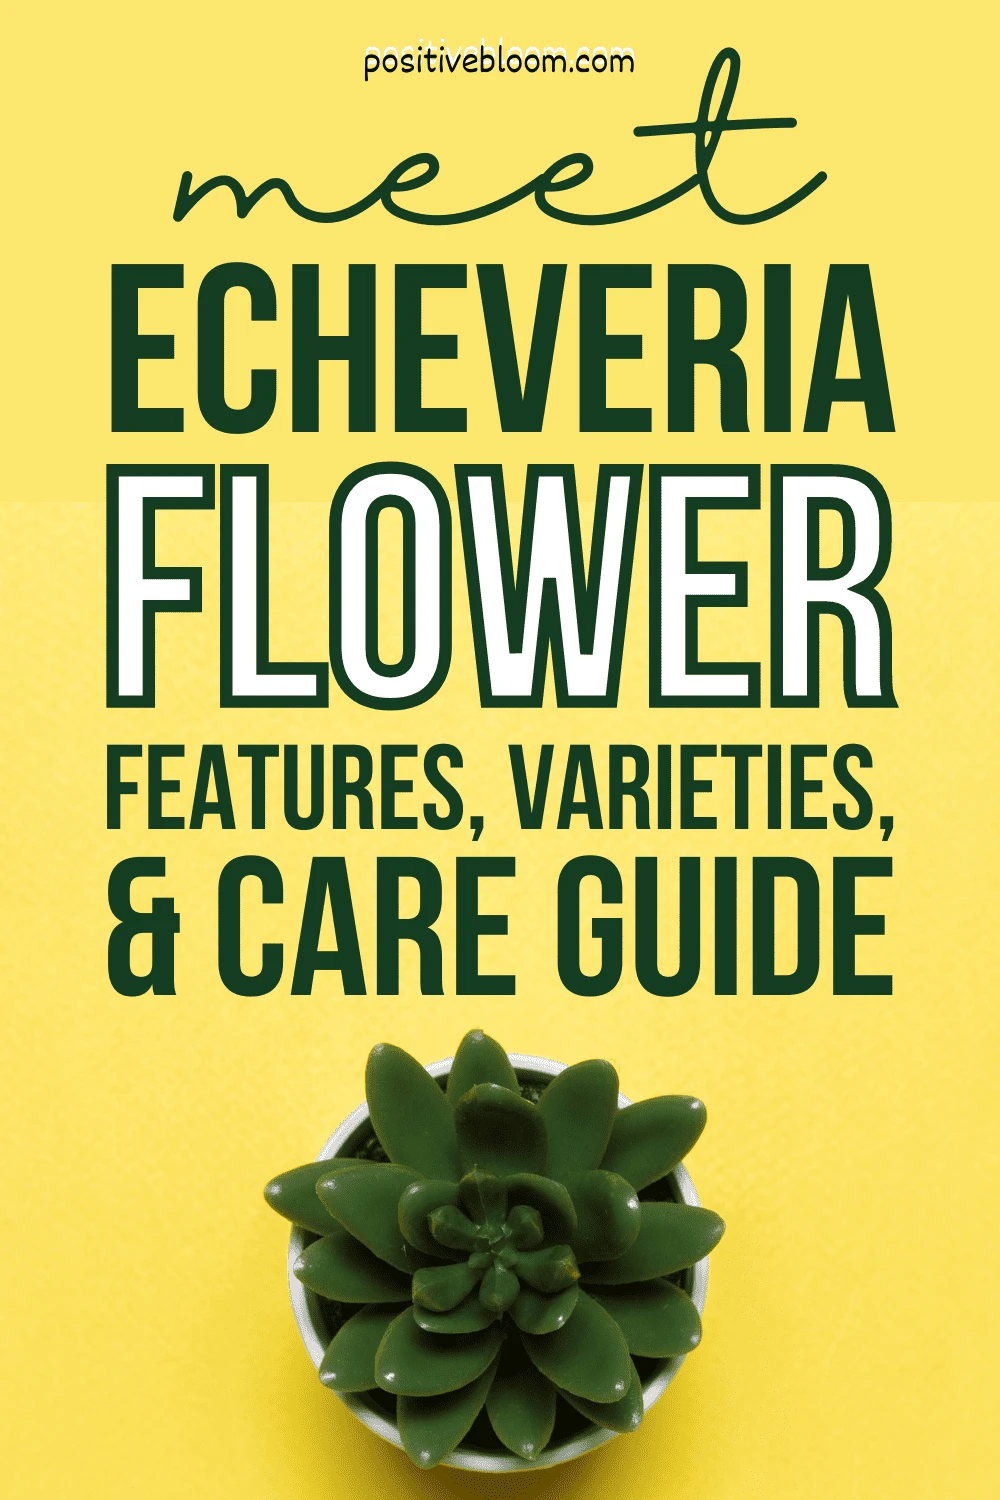 Meet Echeveria Flower Features, Varieties, And Care Guide Pinterest